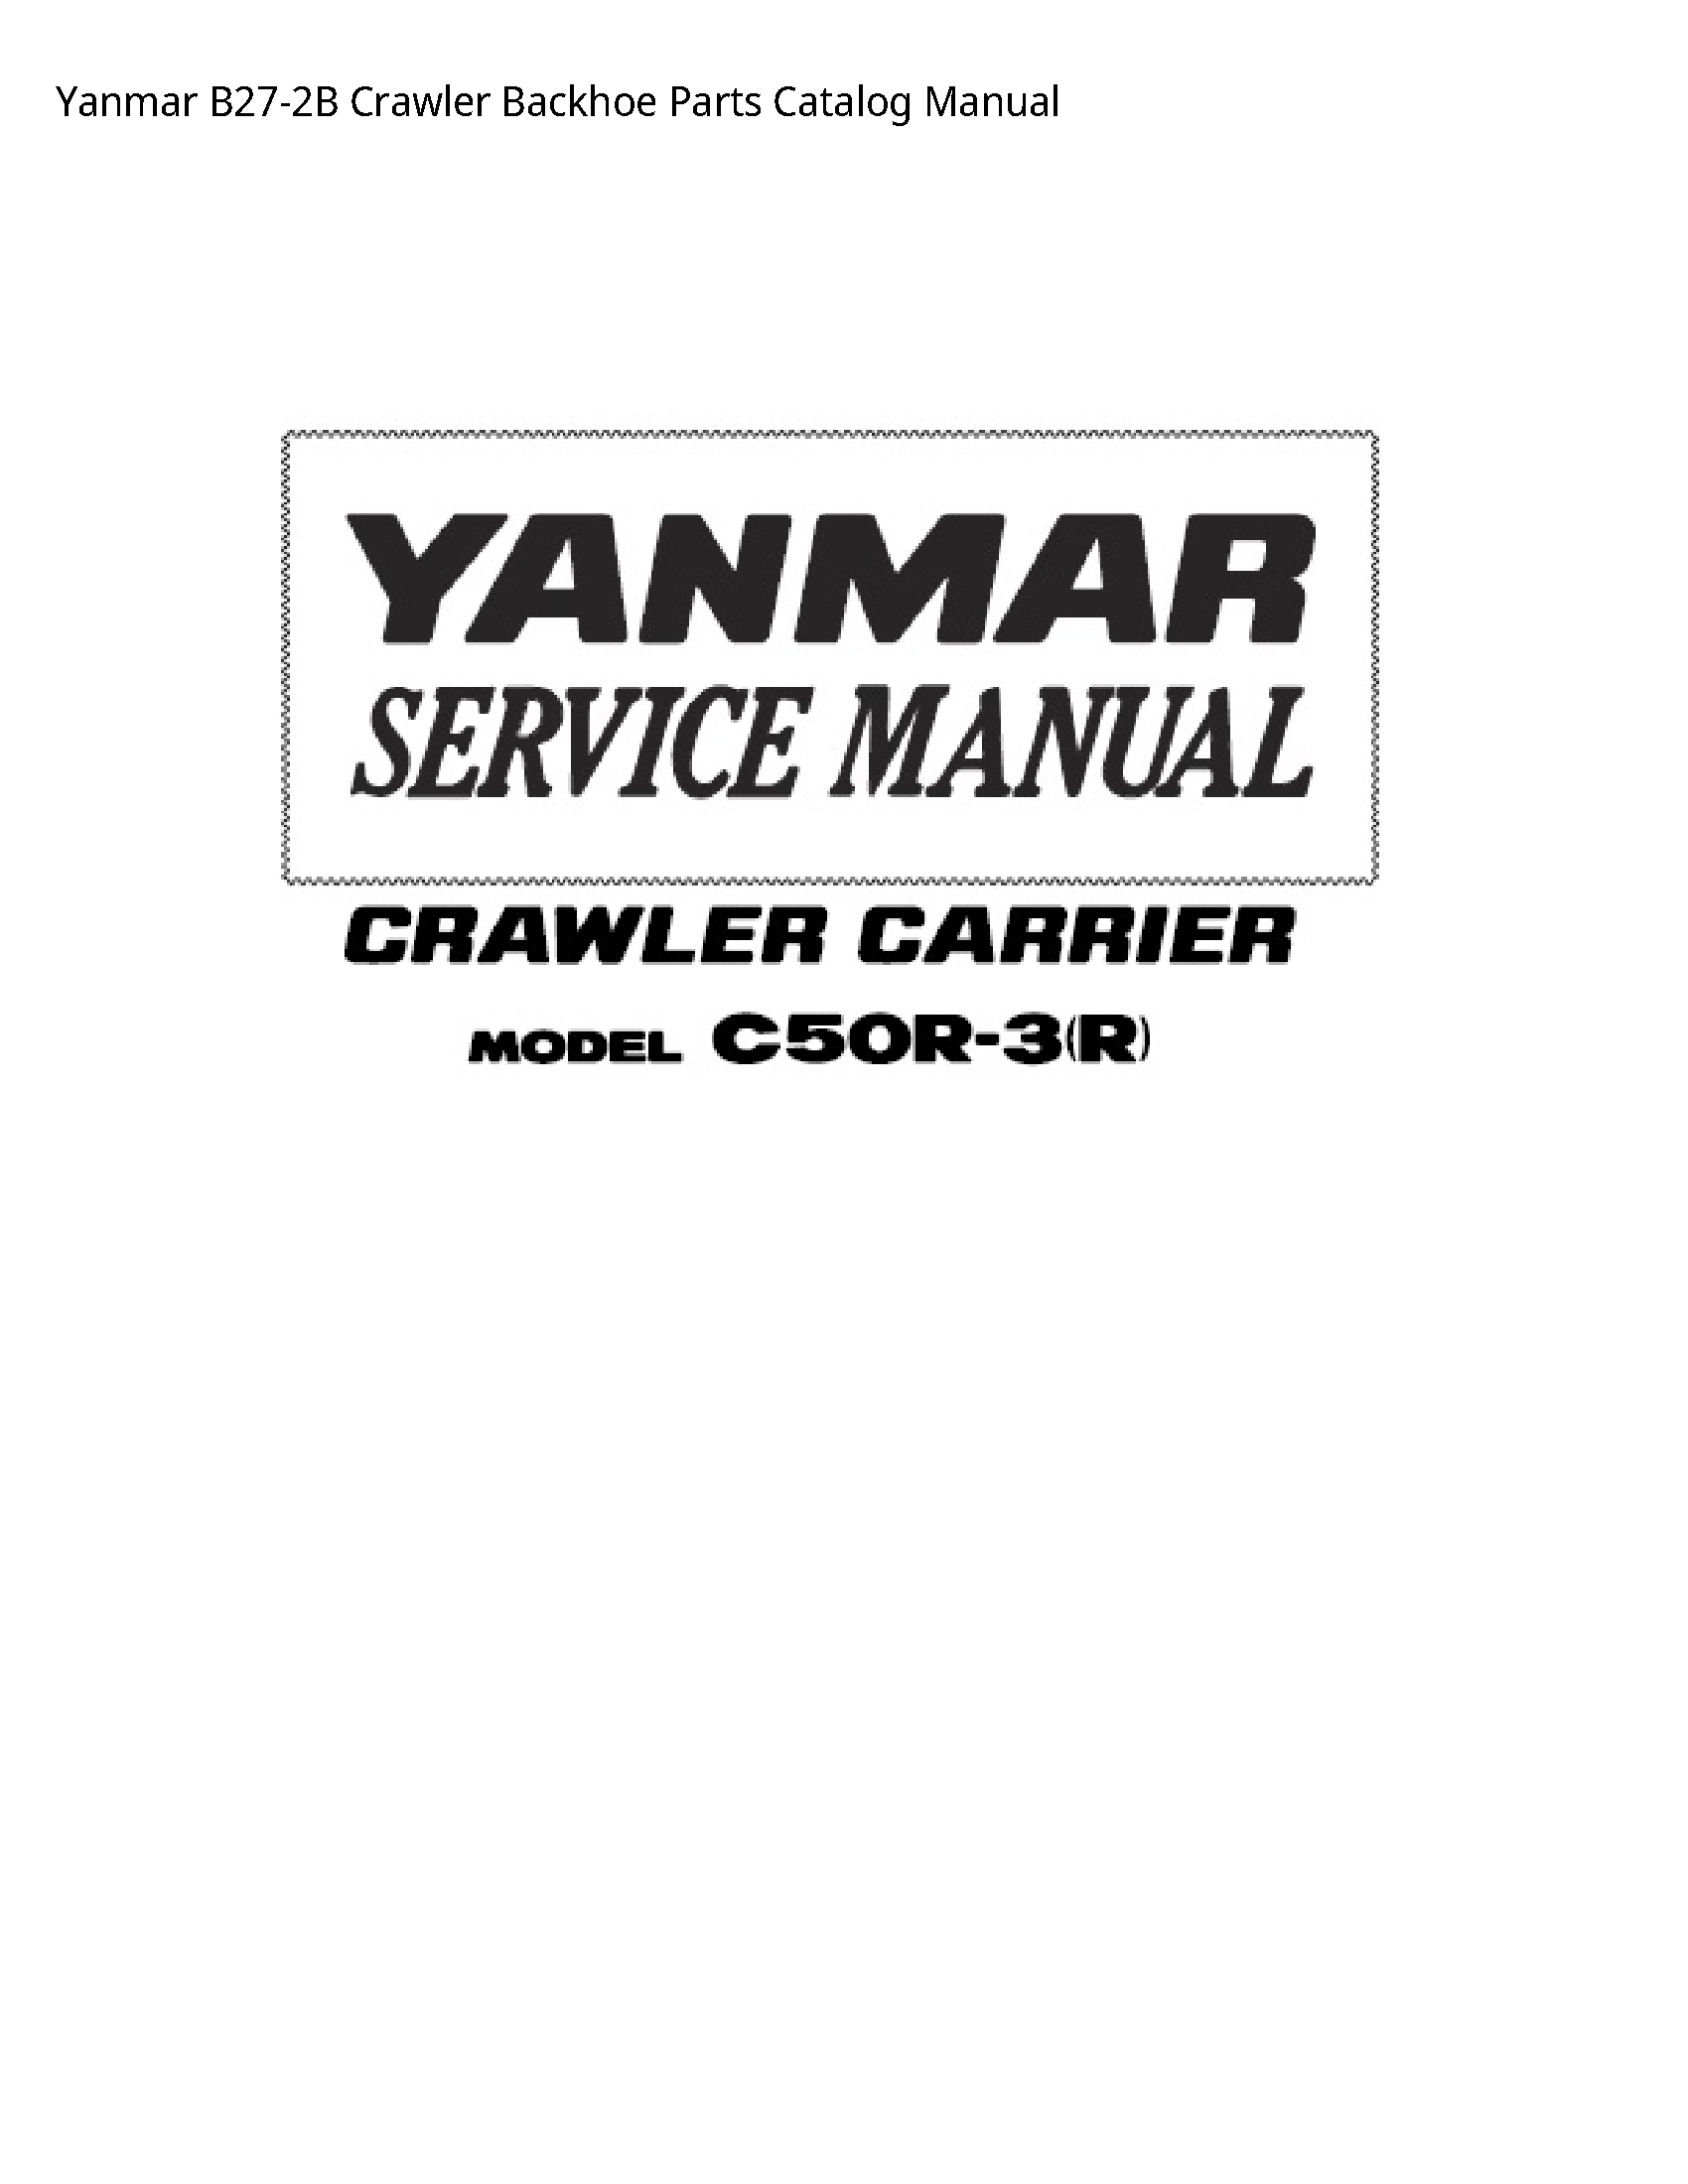 Yanmar B27-2B Crawler Backhoe Parts Catalog manual